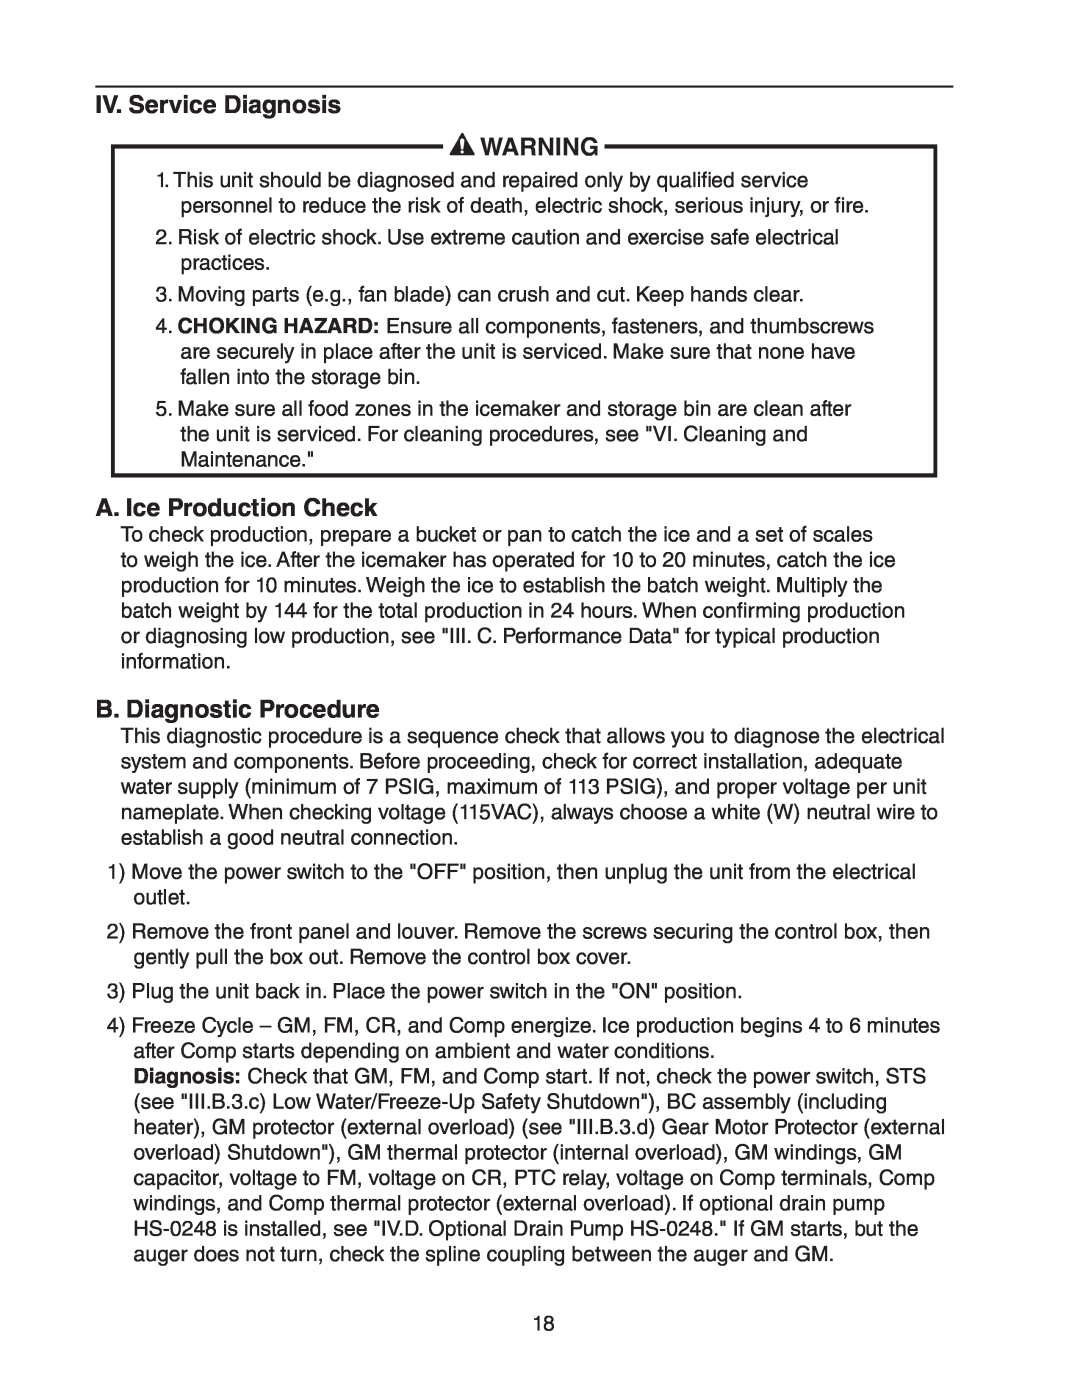 Hoshizaki C-100BAF-ADDS service manual IV. Service Diagnosis, A. Ice Production Check, B. Diagnostic Procedure 